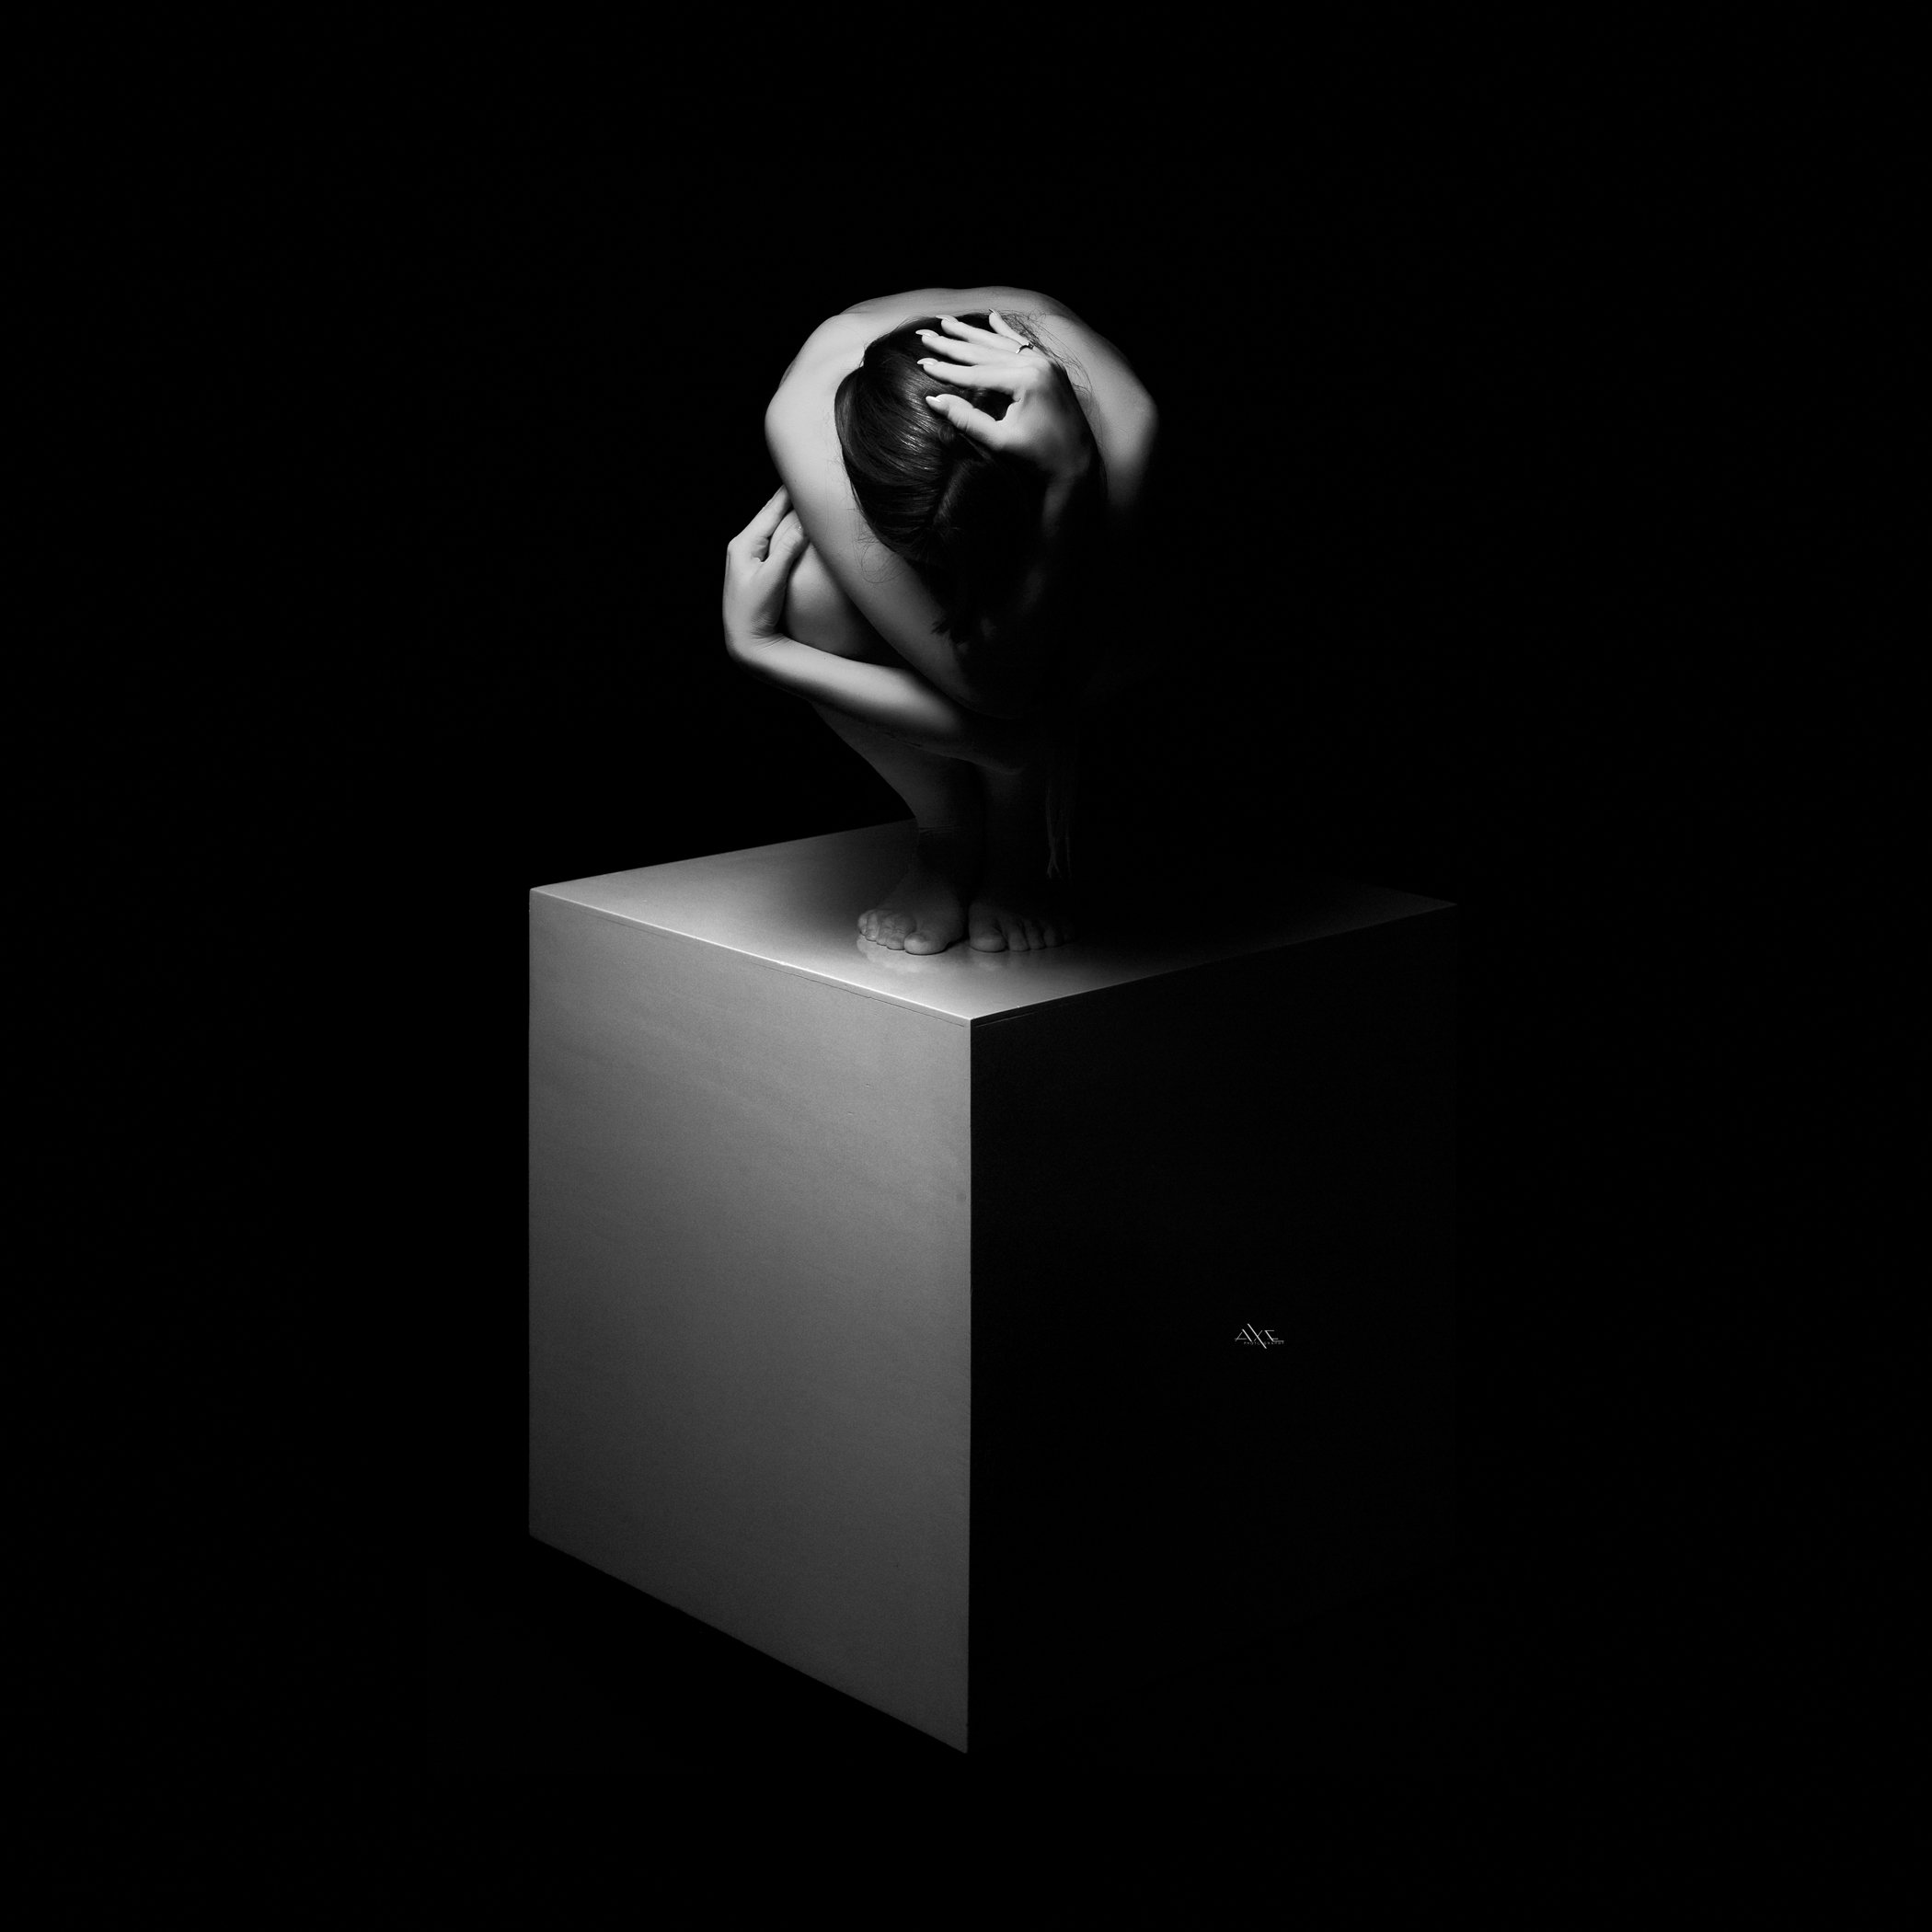 Black and white, Cube, Light, Nude, Woman, Руслан Болгов (Axe)